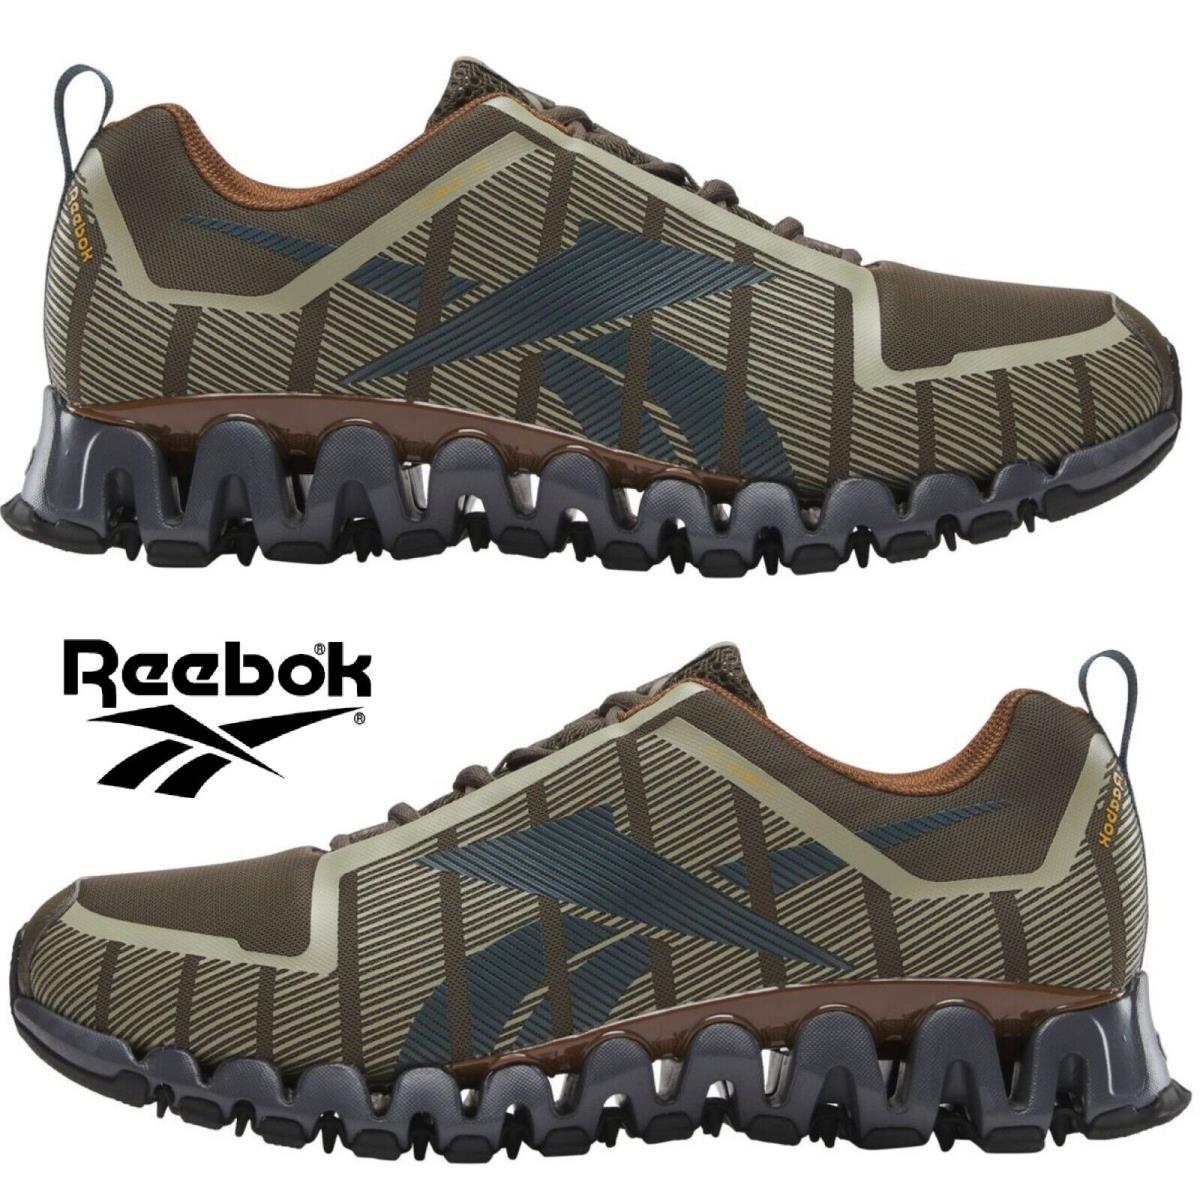 Reebok Zigwild Trail 6 Running Shoes Men`s Sneakers Lightweight Hiking Walking - Beige, Manufacturer: Beige